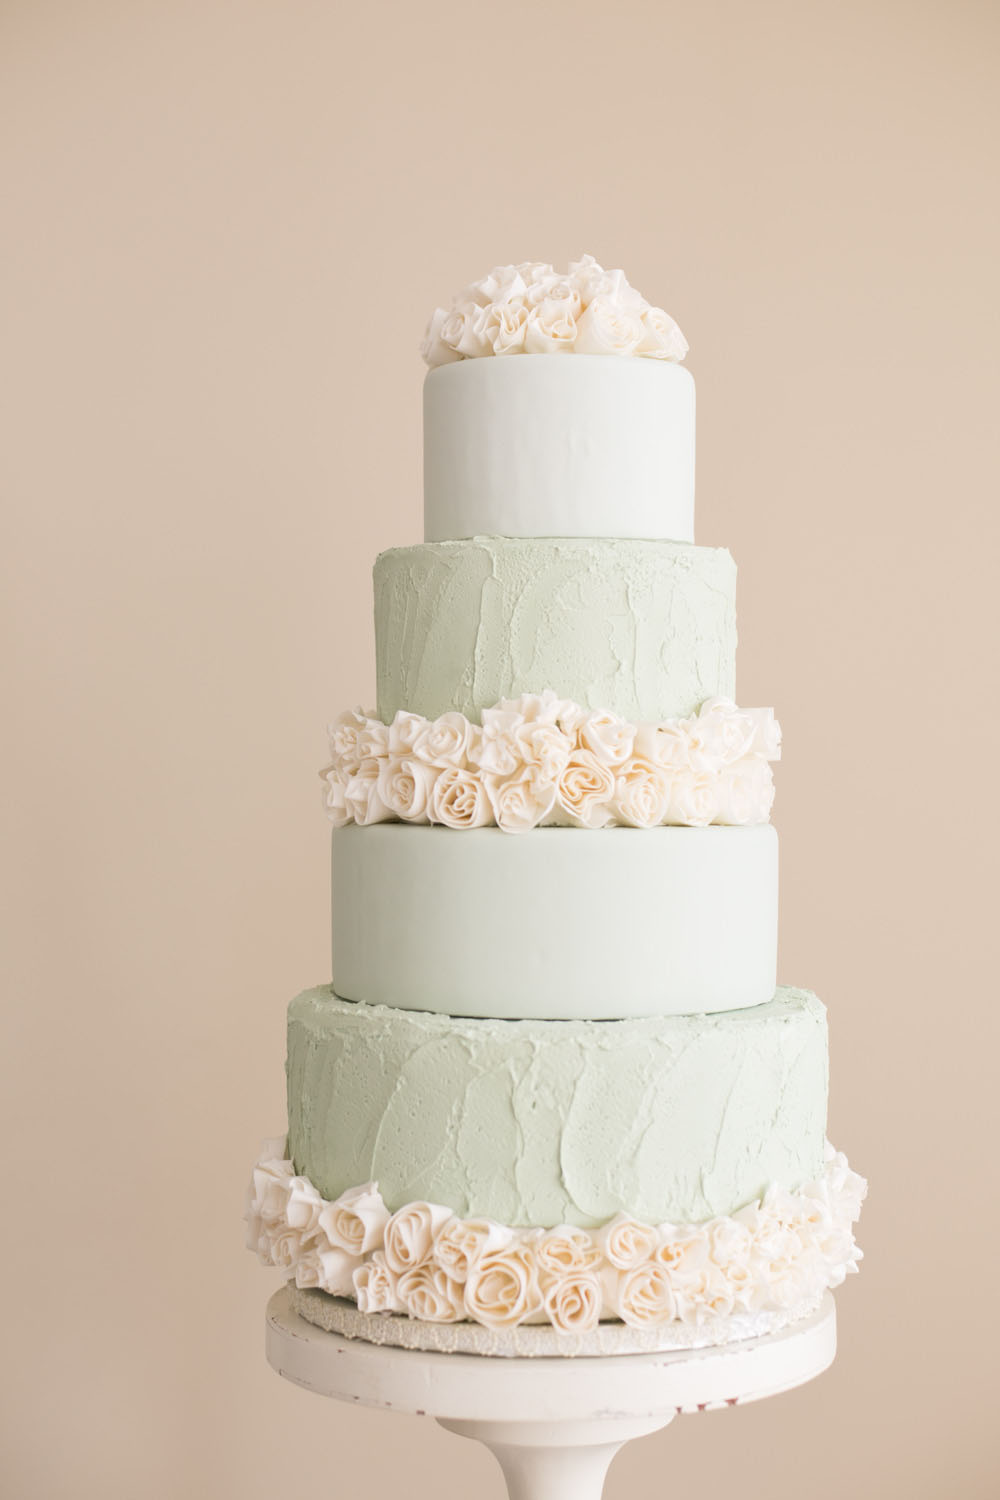 niagara-wedding-cakes-sweet-celebrations-custom-cakes-005.JPG